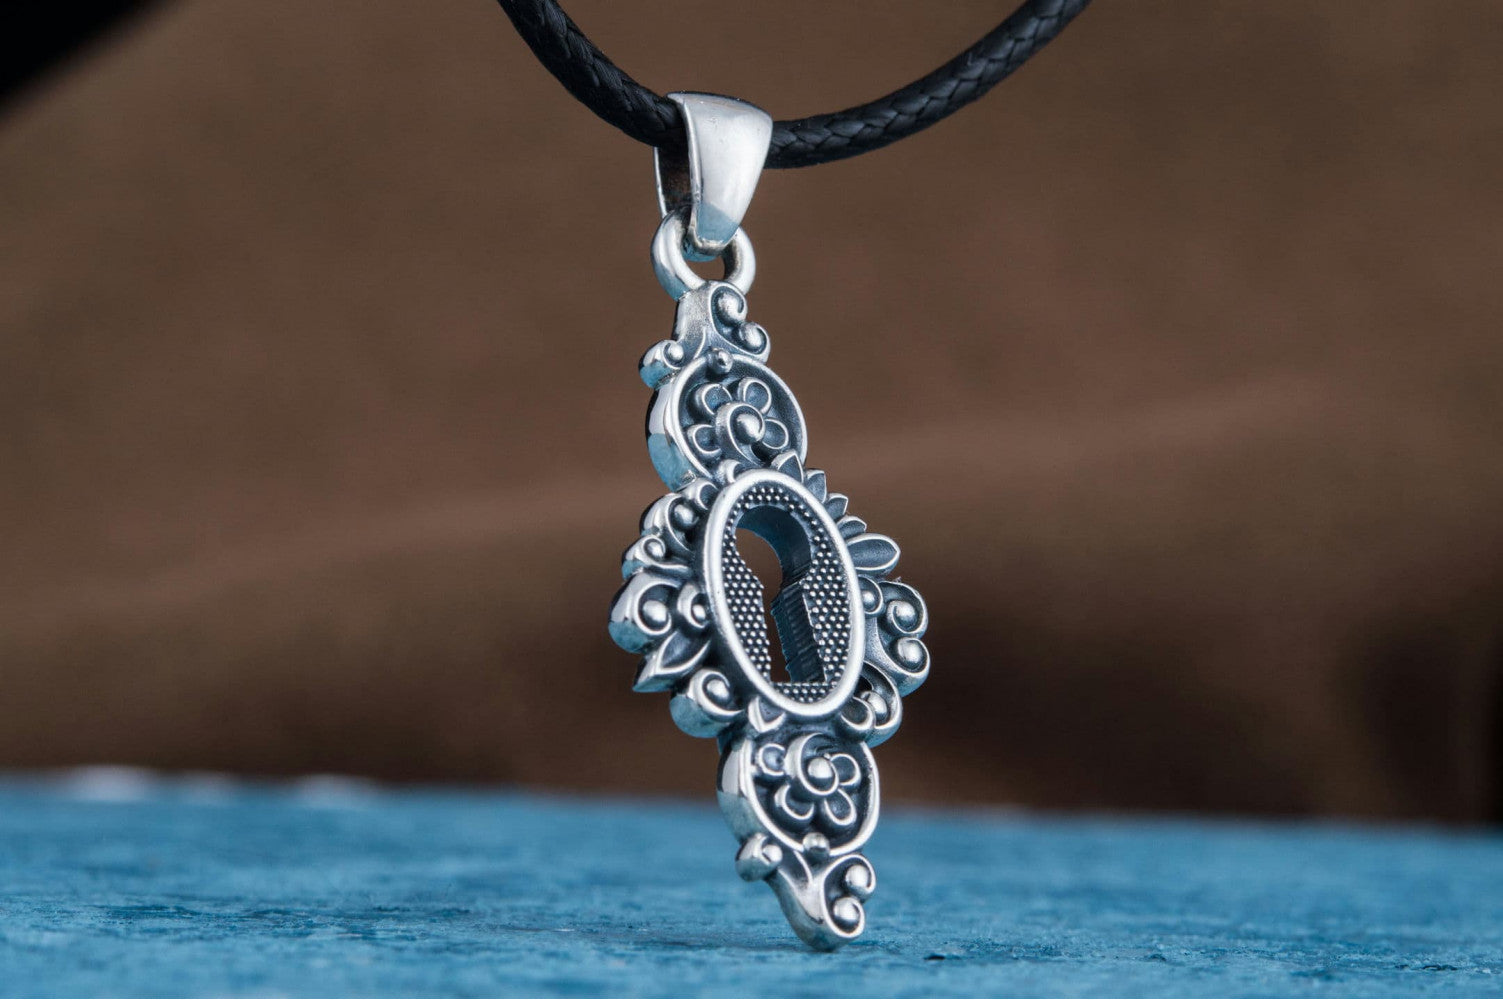 Keyhole Pendant with Flowers Ornament Sterling Silver Jewelry - vikingworkshop